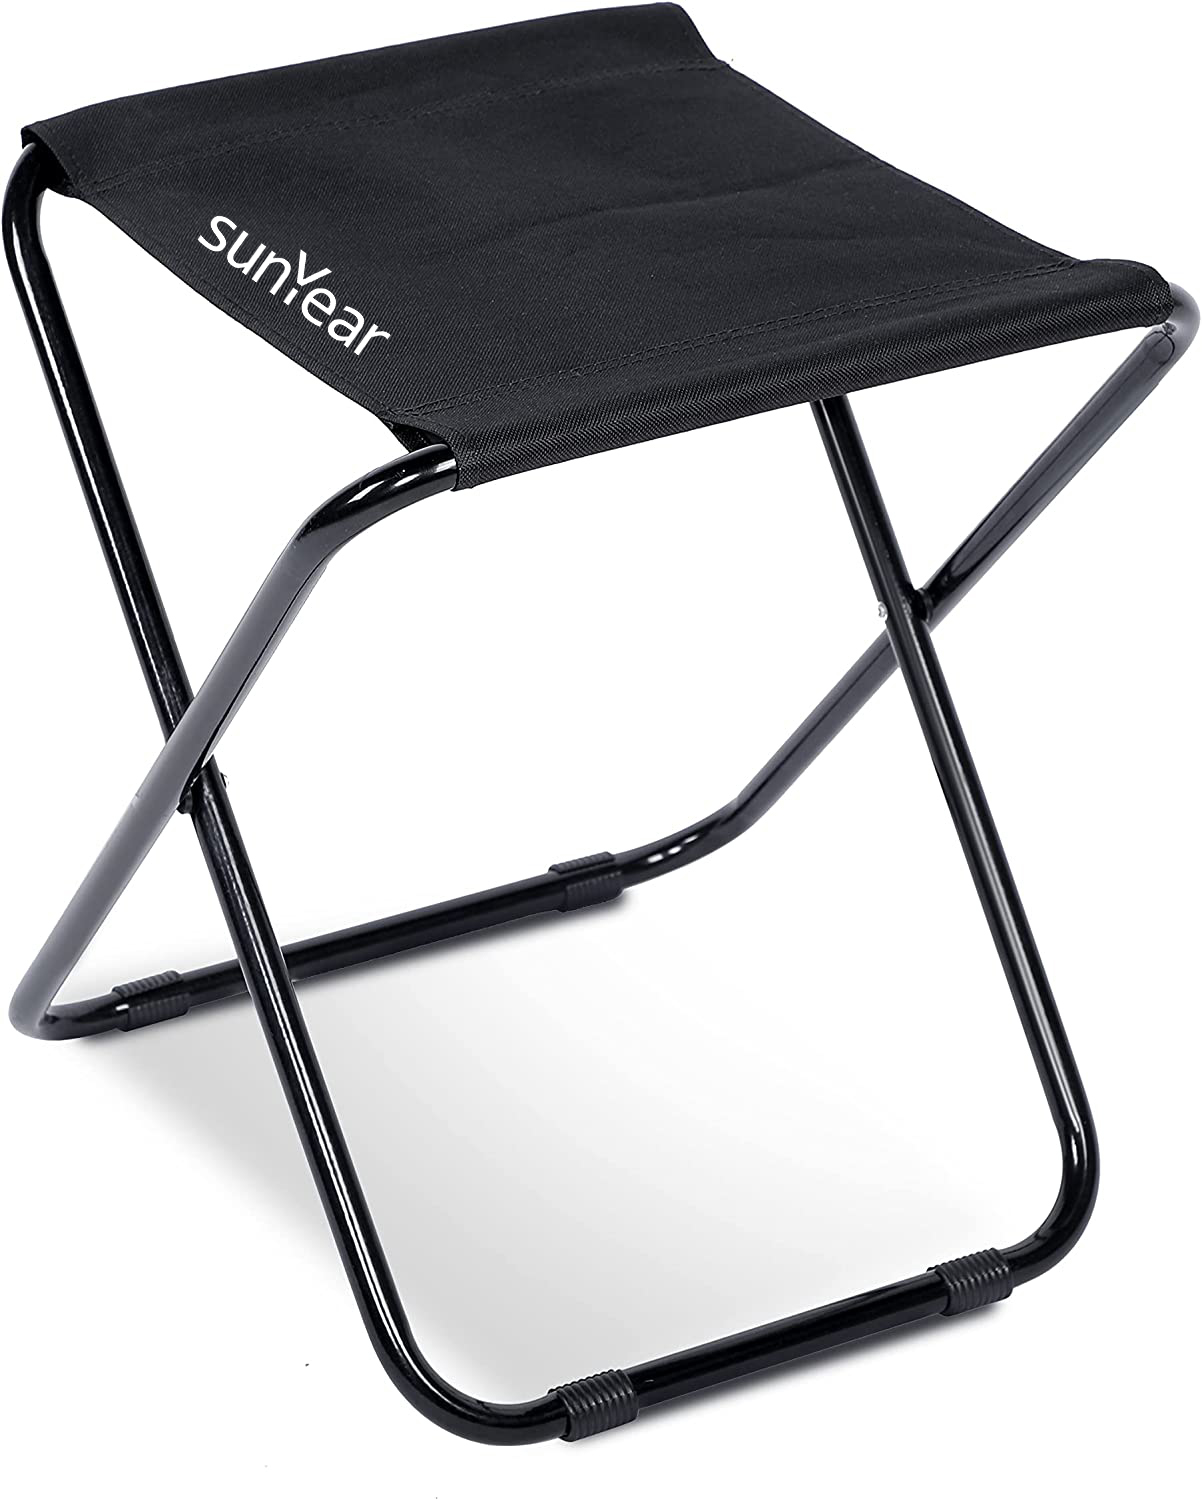 US$ 31.99 - Sunyear Hammock Rain Fly Tent Tarp Provides Effective